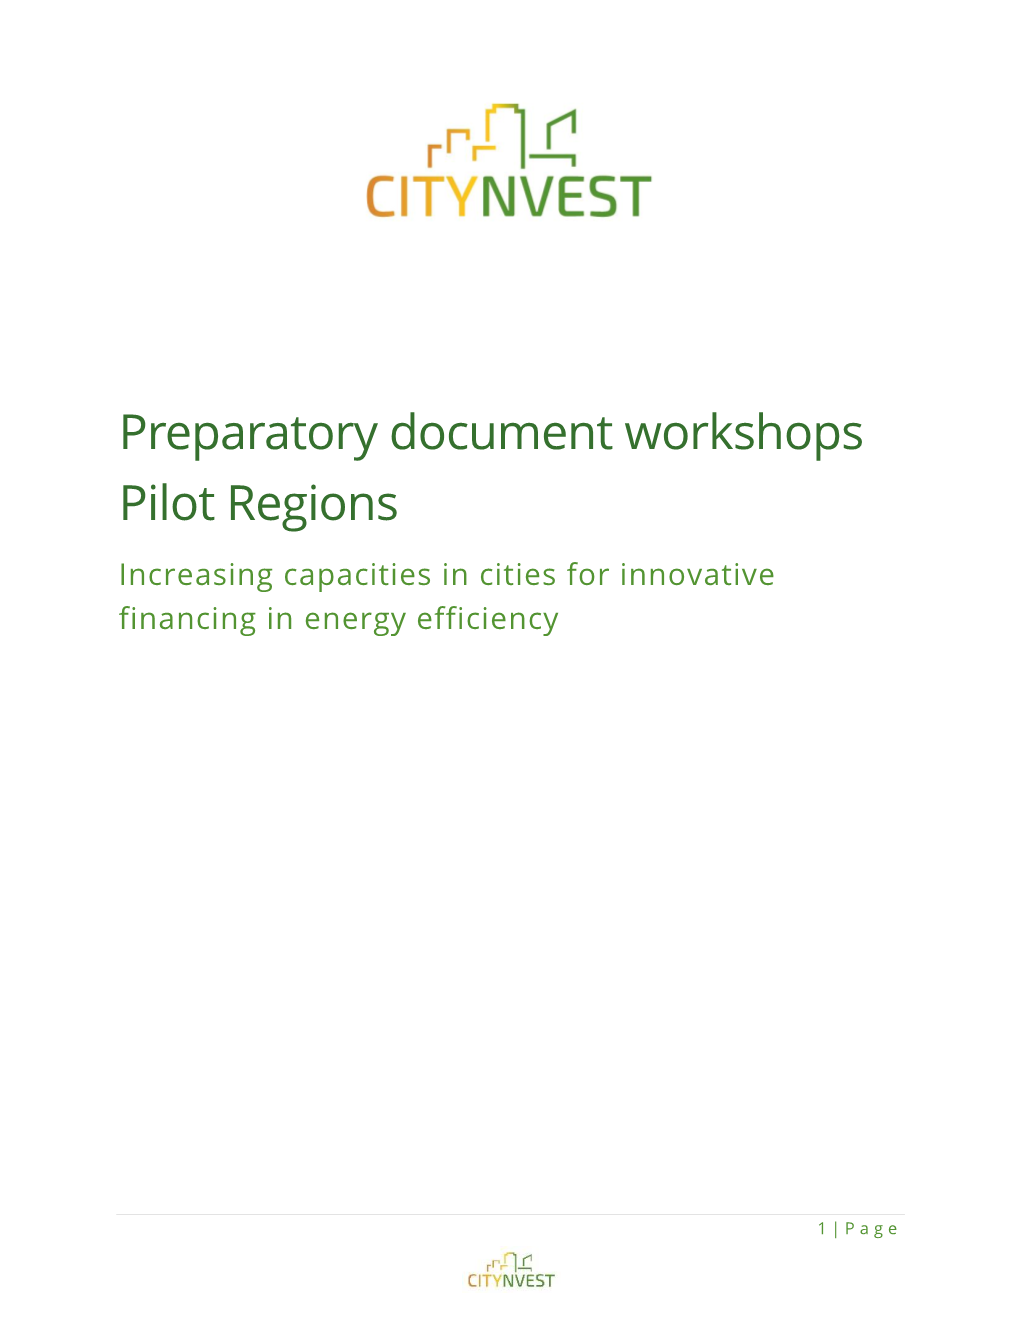 Preparatory Document Workshops Pilot Regions